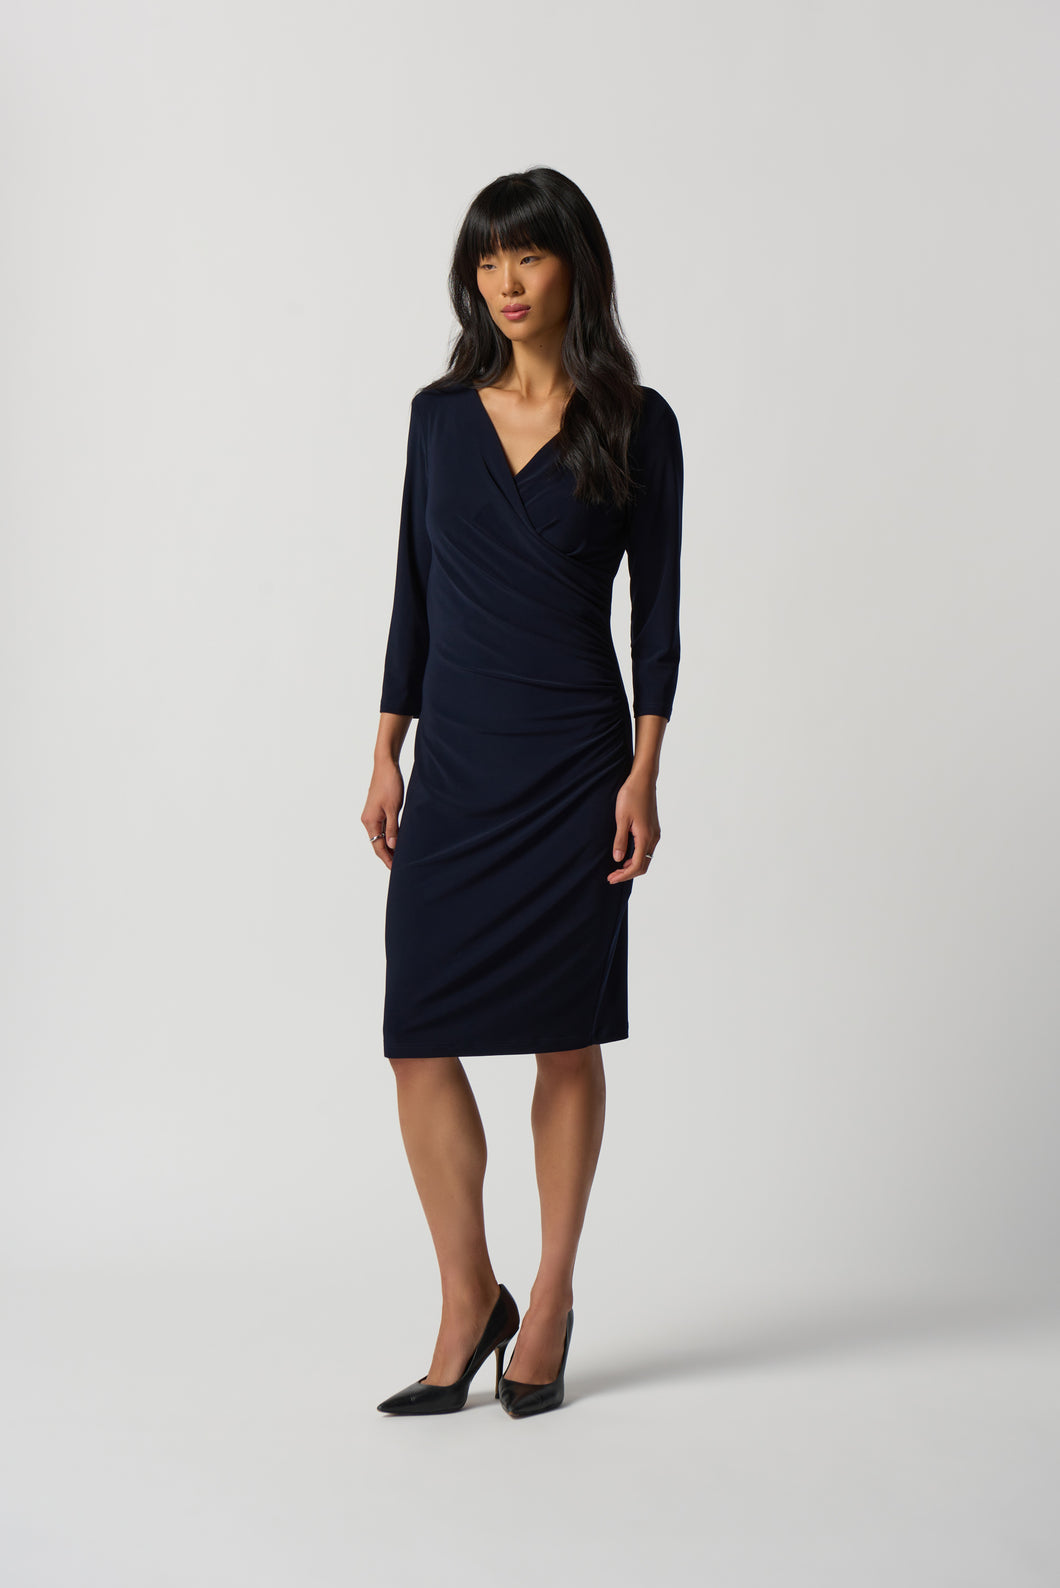 Joseph Ribkoff 3/4 Sleeve V-Neck Wrap Dress in Black or Midnight Blue